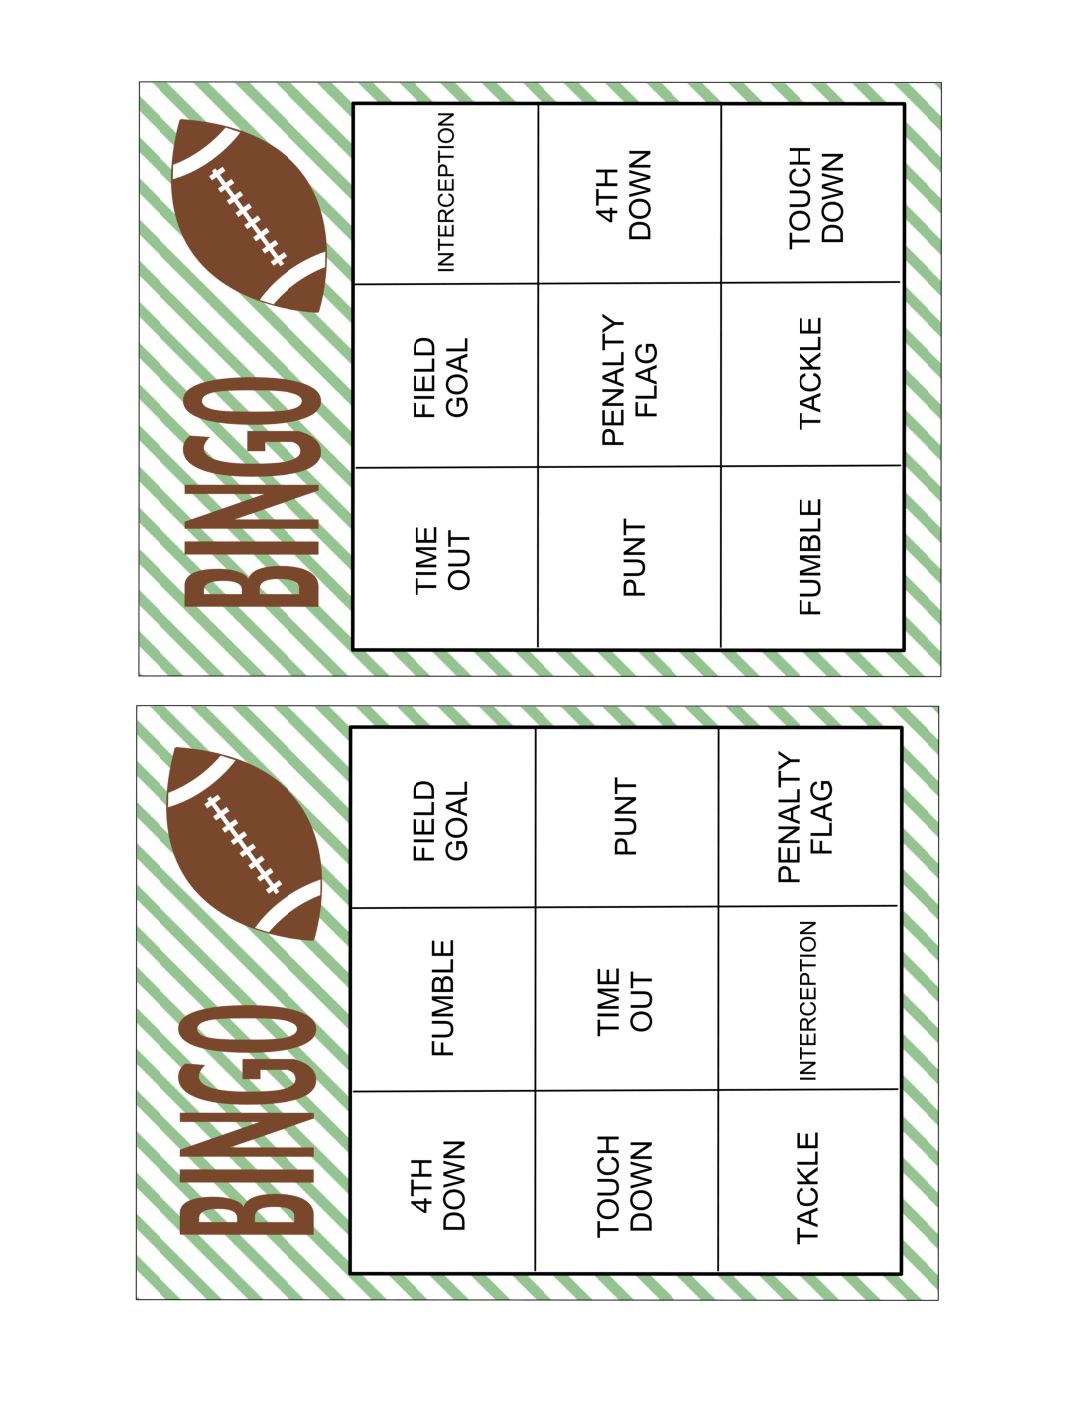 football-bingo-typically-simple